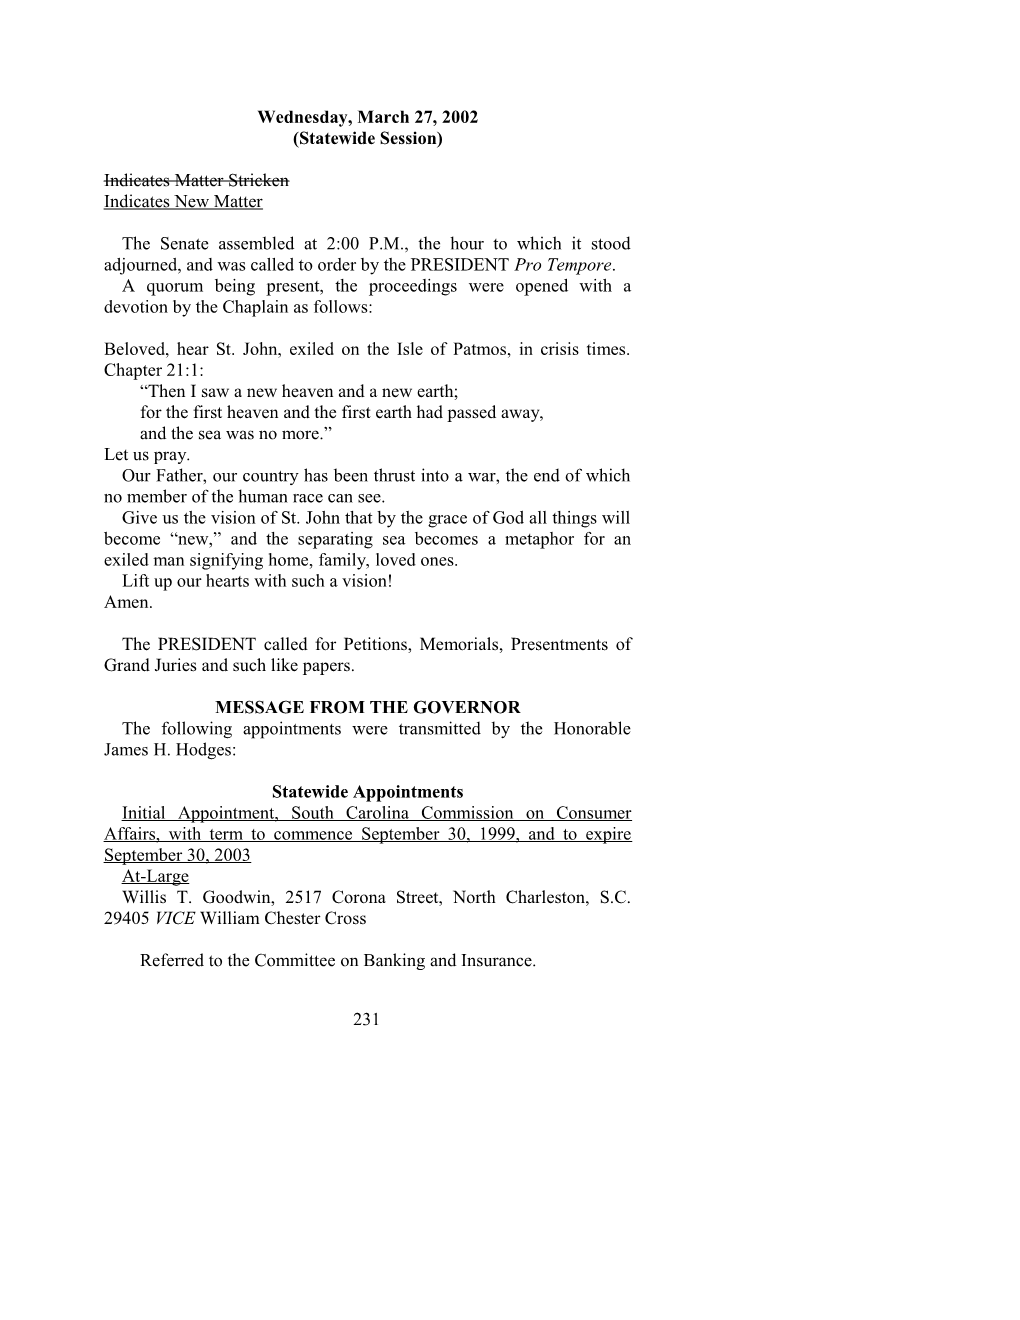 Senate Journal for Mar. 27, 2002 - South Carolina Legislature Online